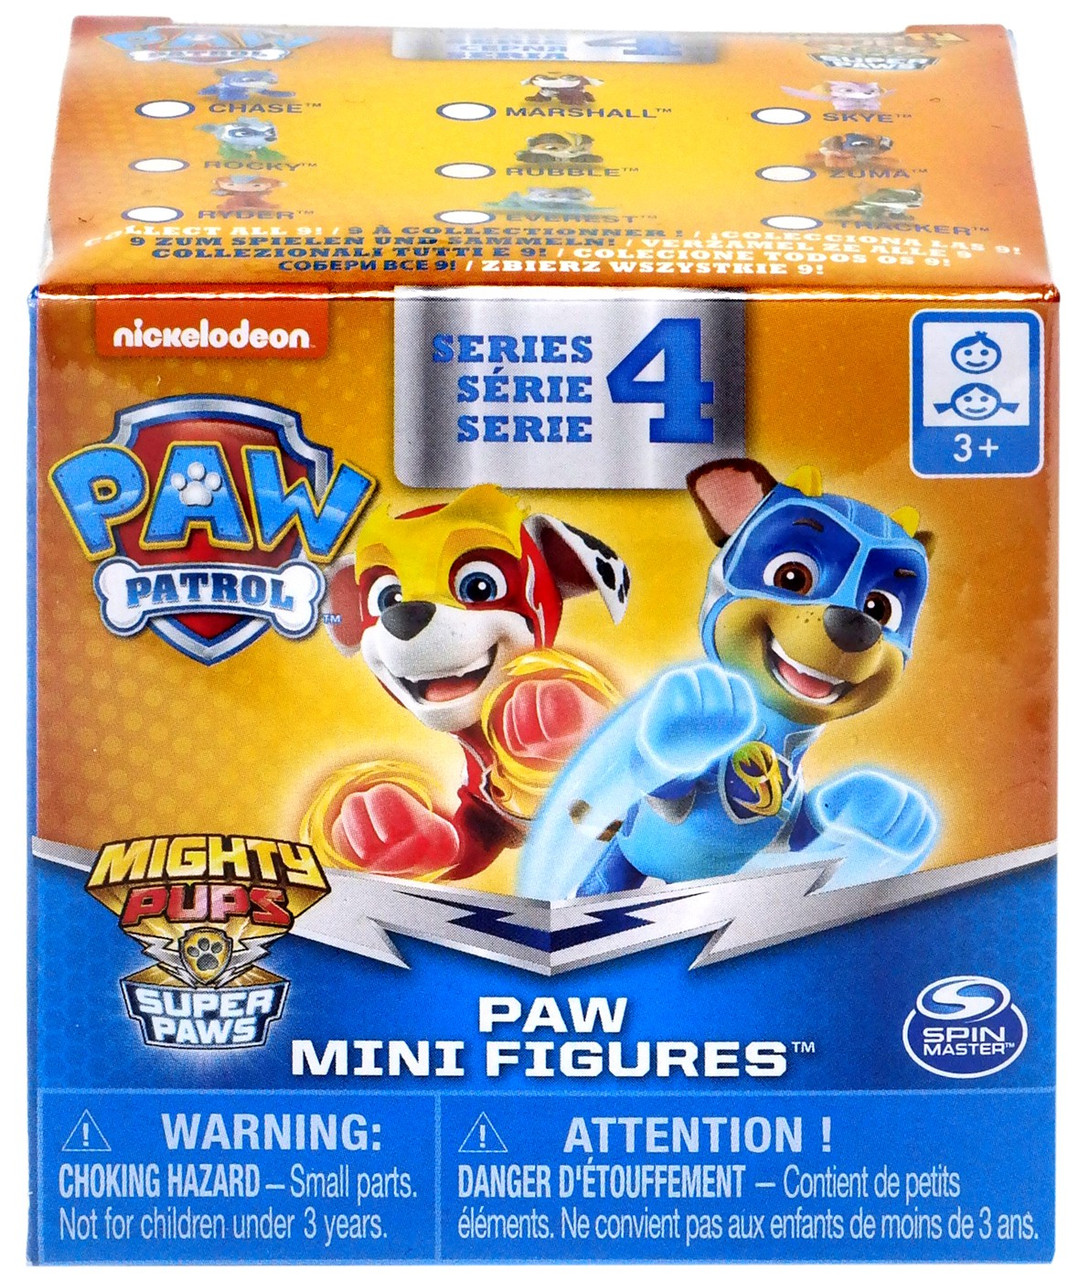 miniature paw patrol figures